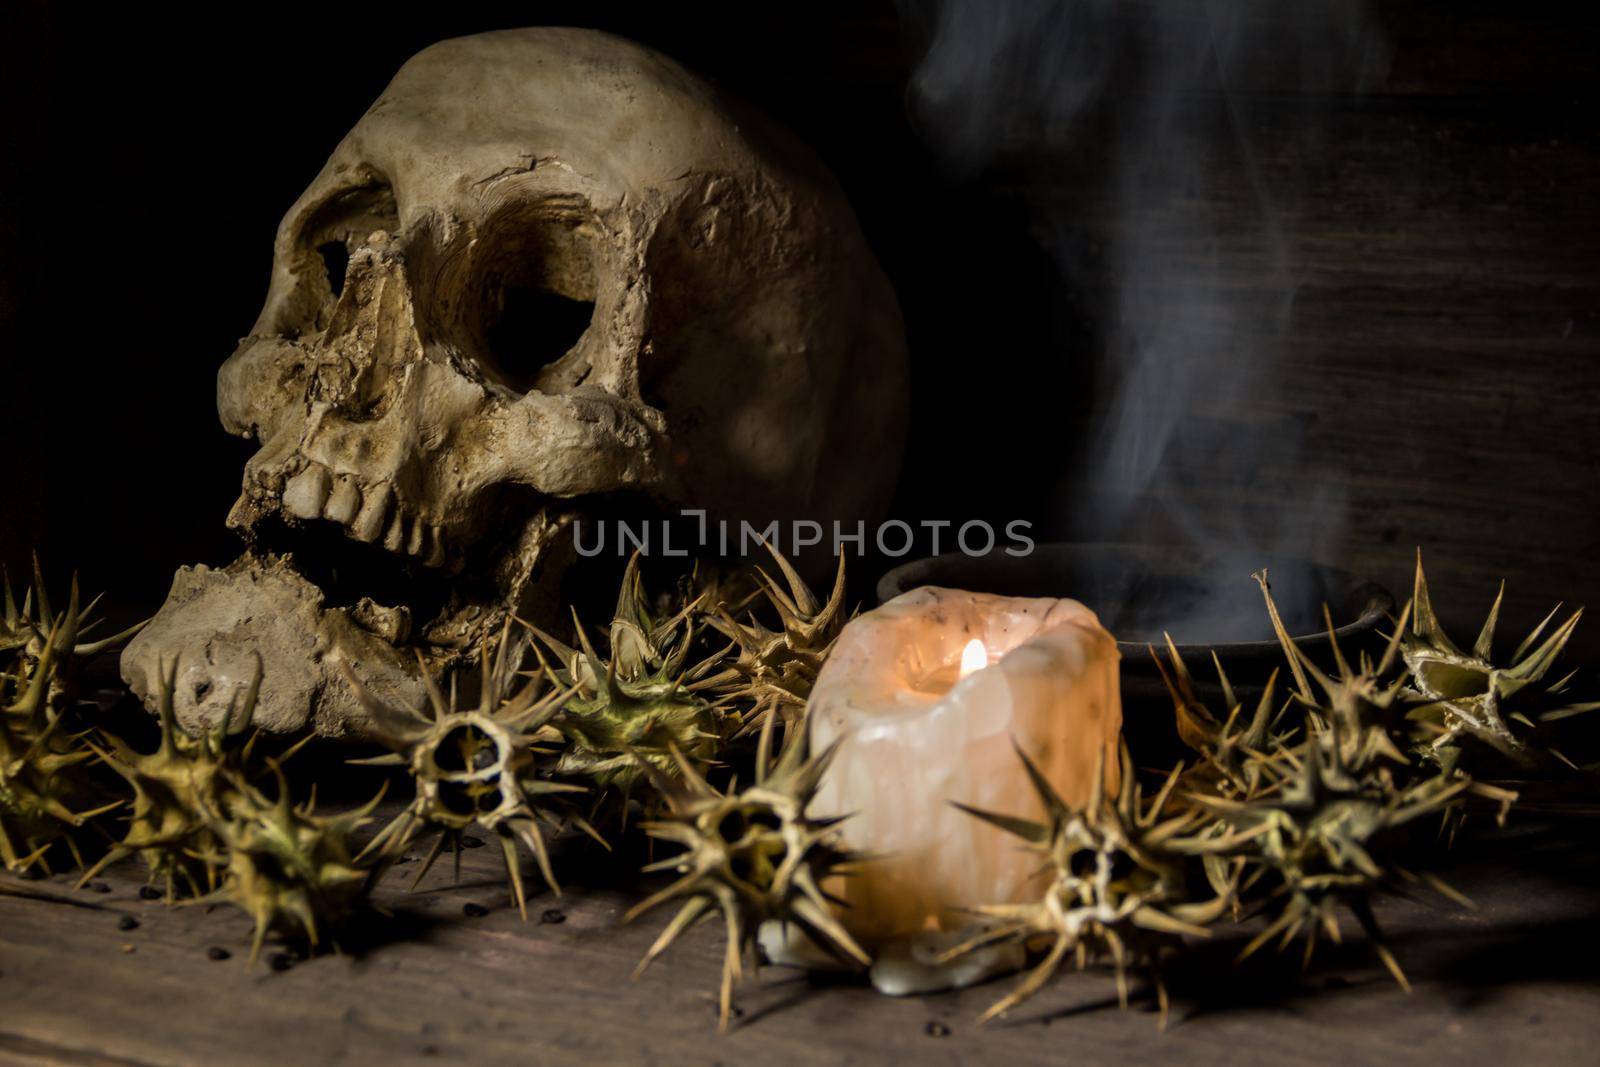 burundanga with a human skull fire and smoke. Shamanic ritual